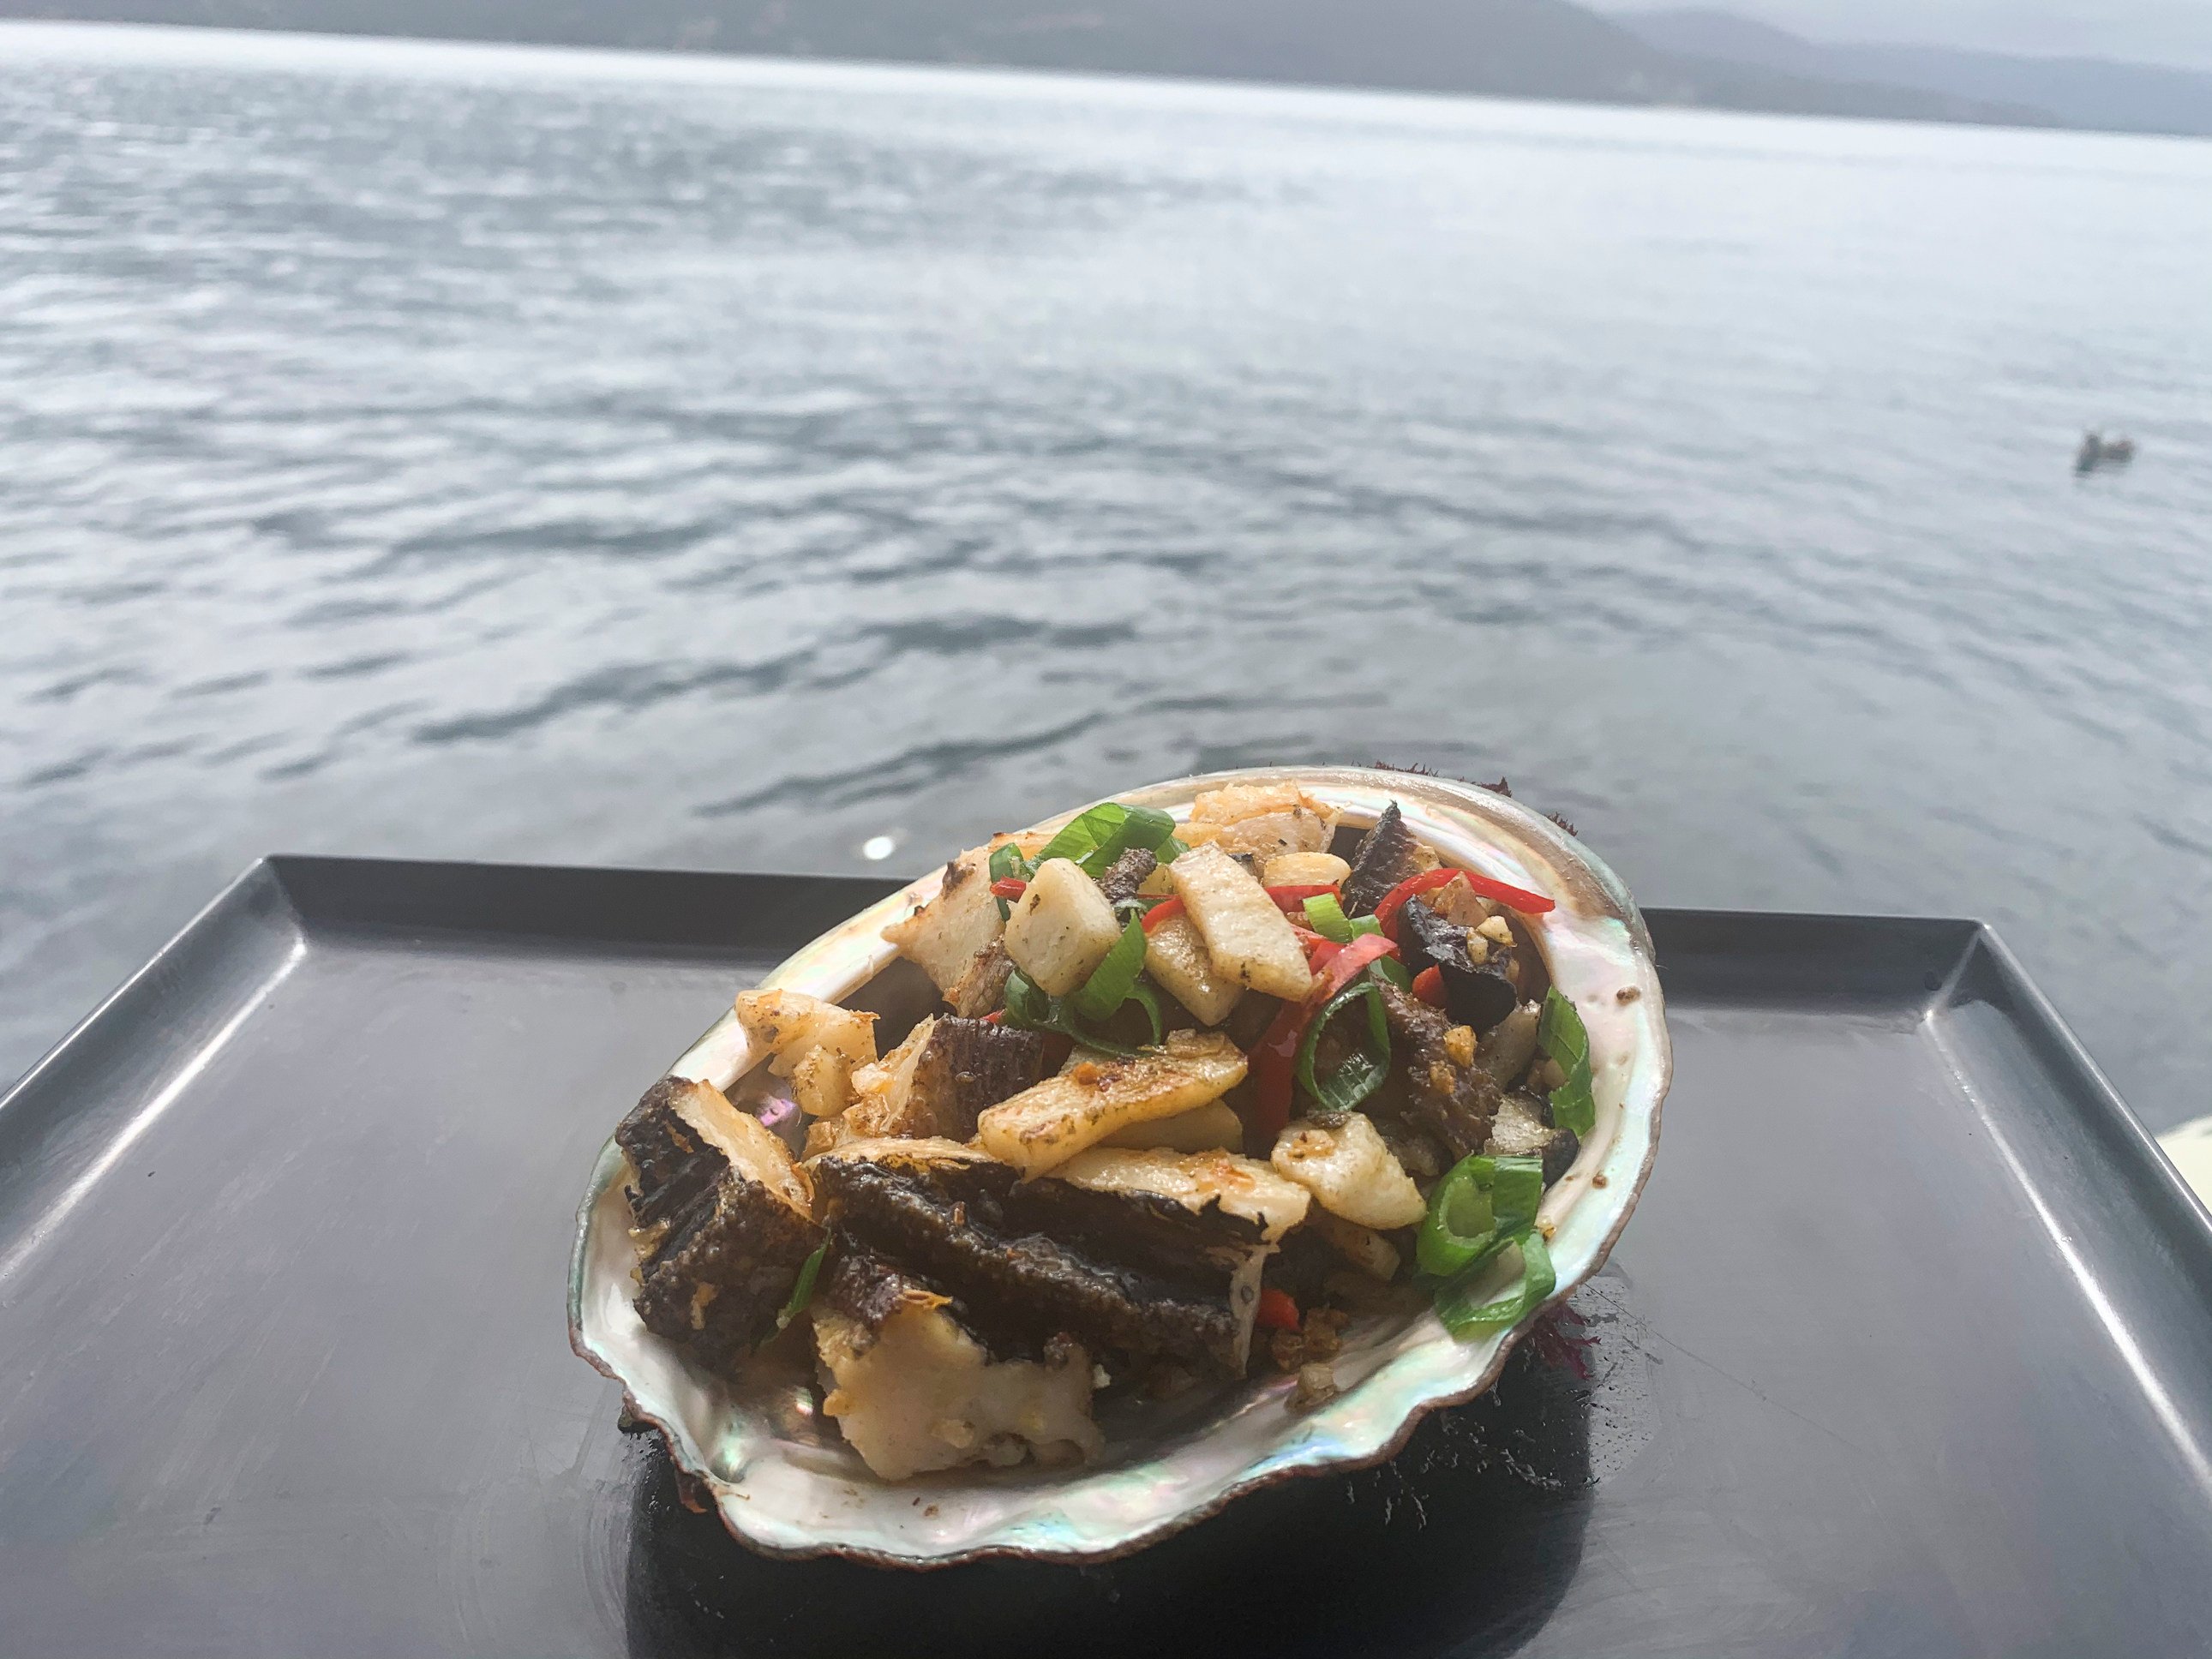 Freshly prepared abalone served in the shell, taken near Bruny Island,  Tasmania, during Pennicott Wilderness Journeys’ “Tasmanian Seafood Seduction” trip. Photo: Chris Dwyer